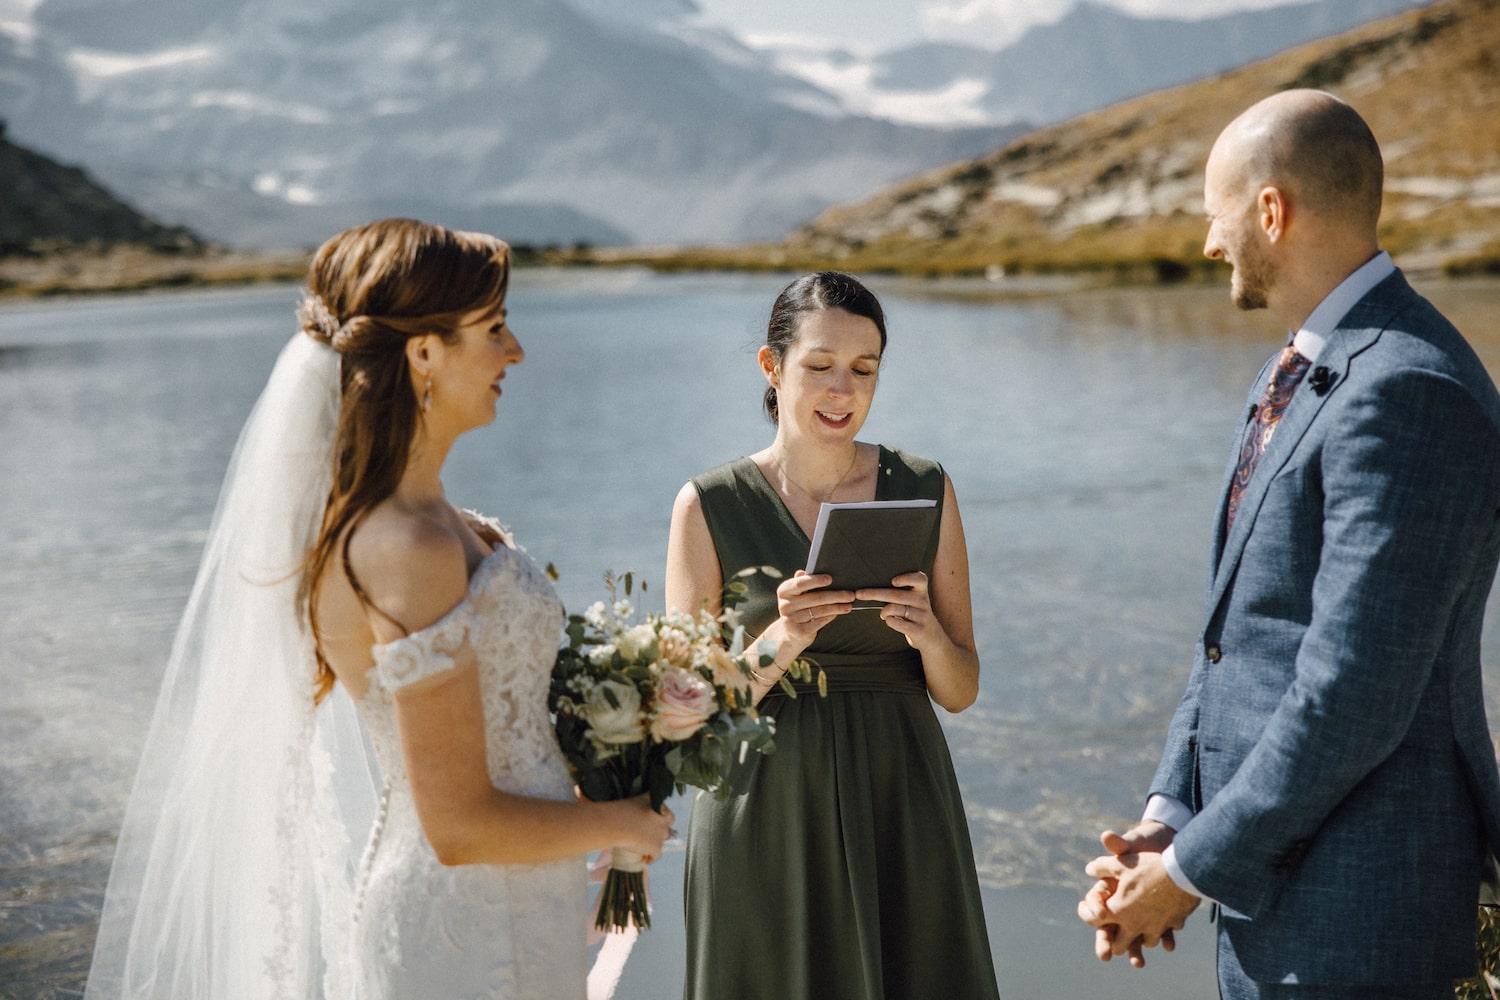 secular wedding ceremony in Zermatt